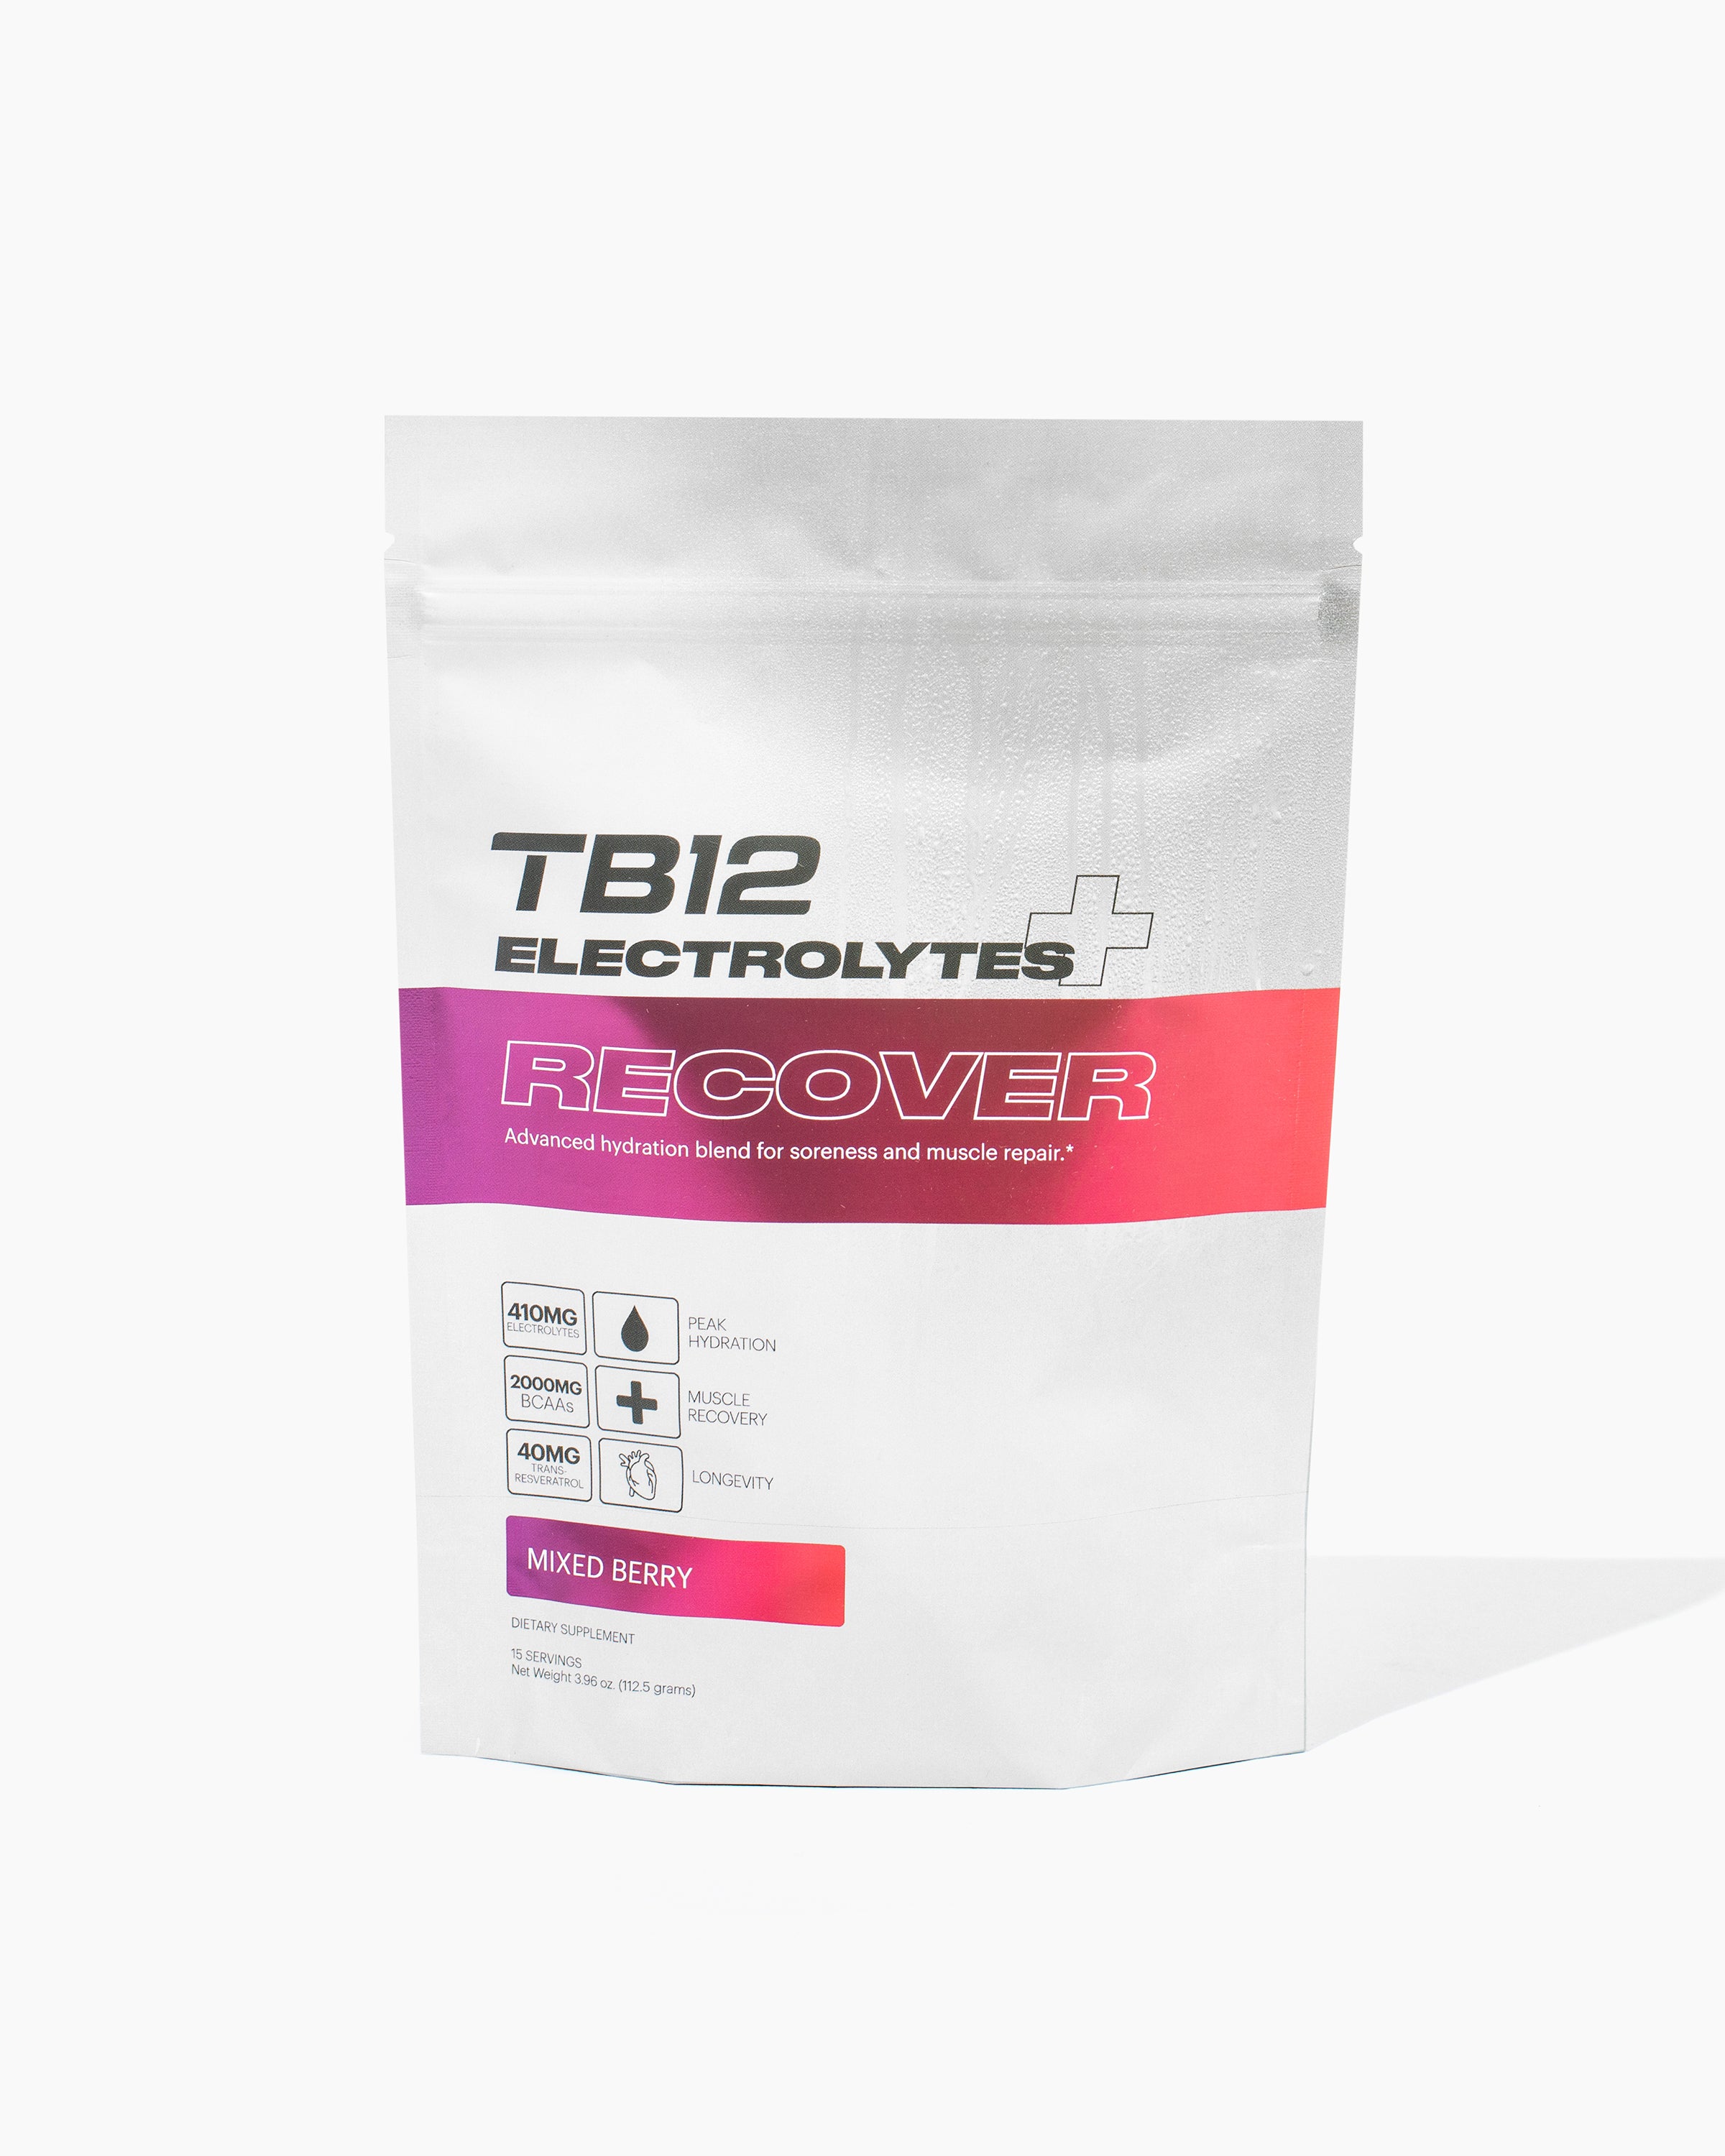 TB12 Electrolytes+ Perform & Recover Set (15ct Powder)